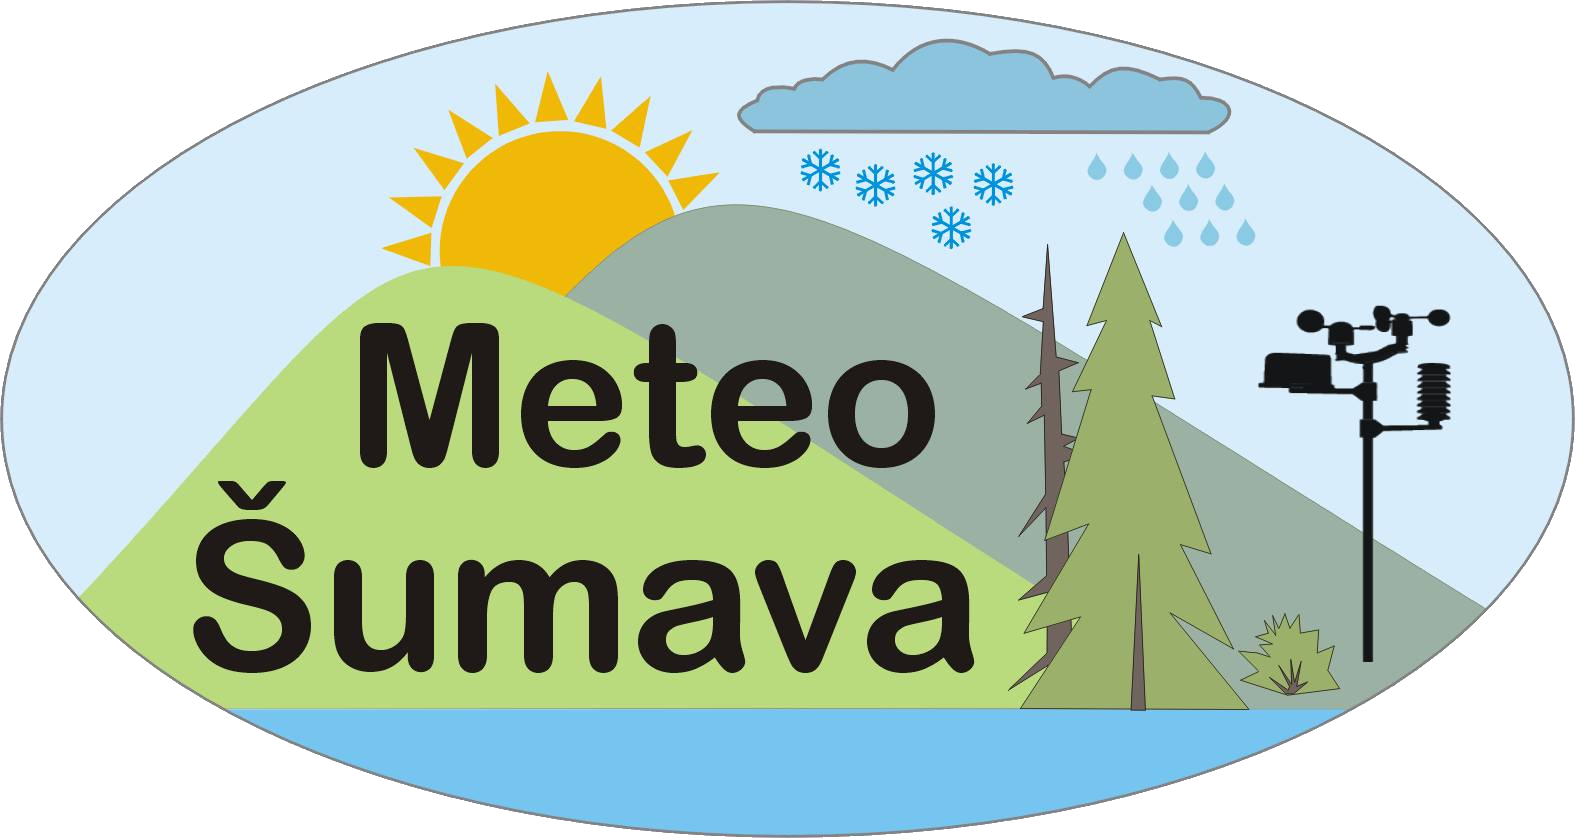 Meteo aktuality ze Šumavy